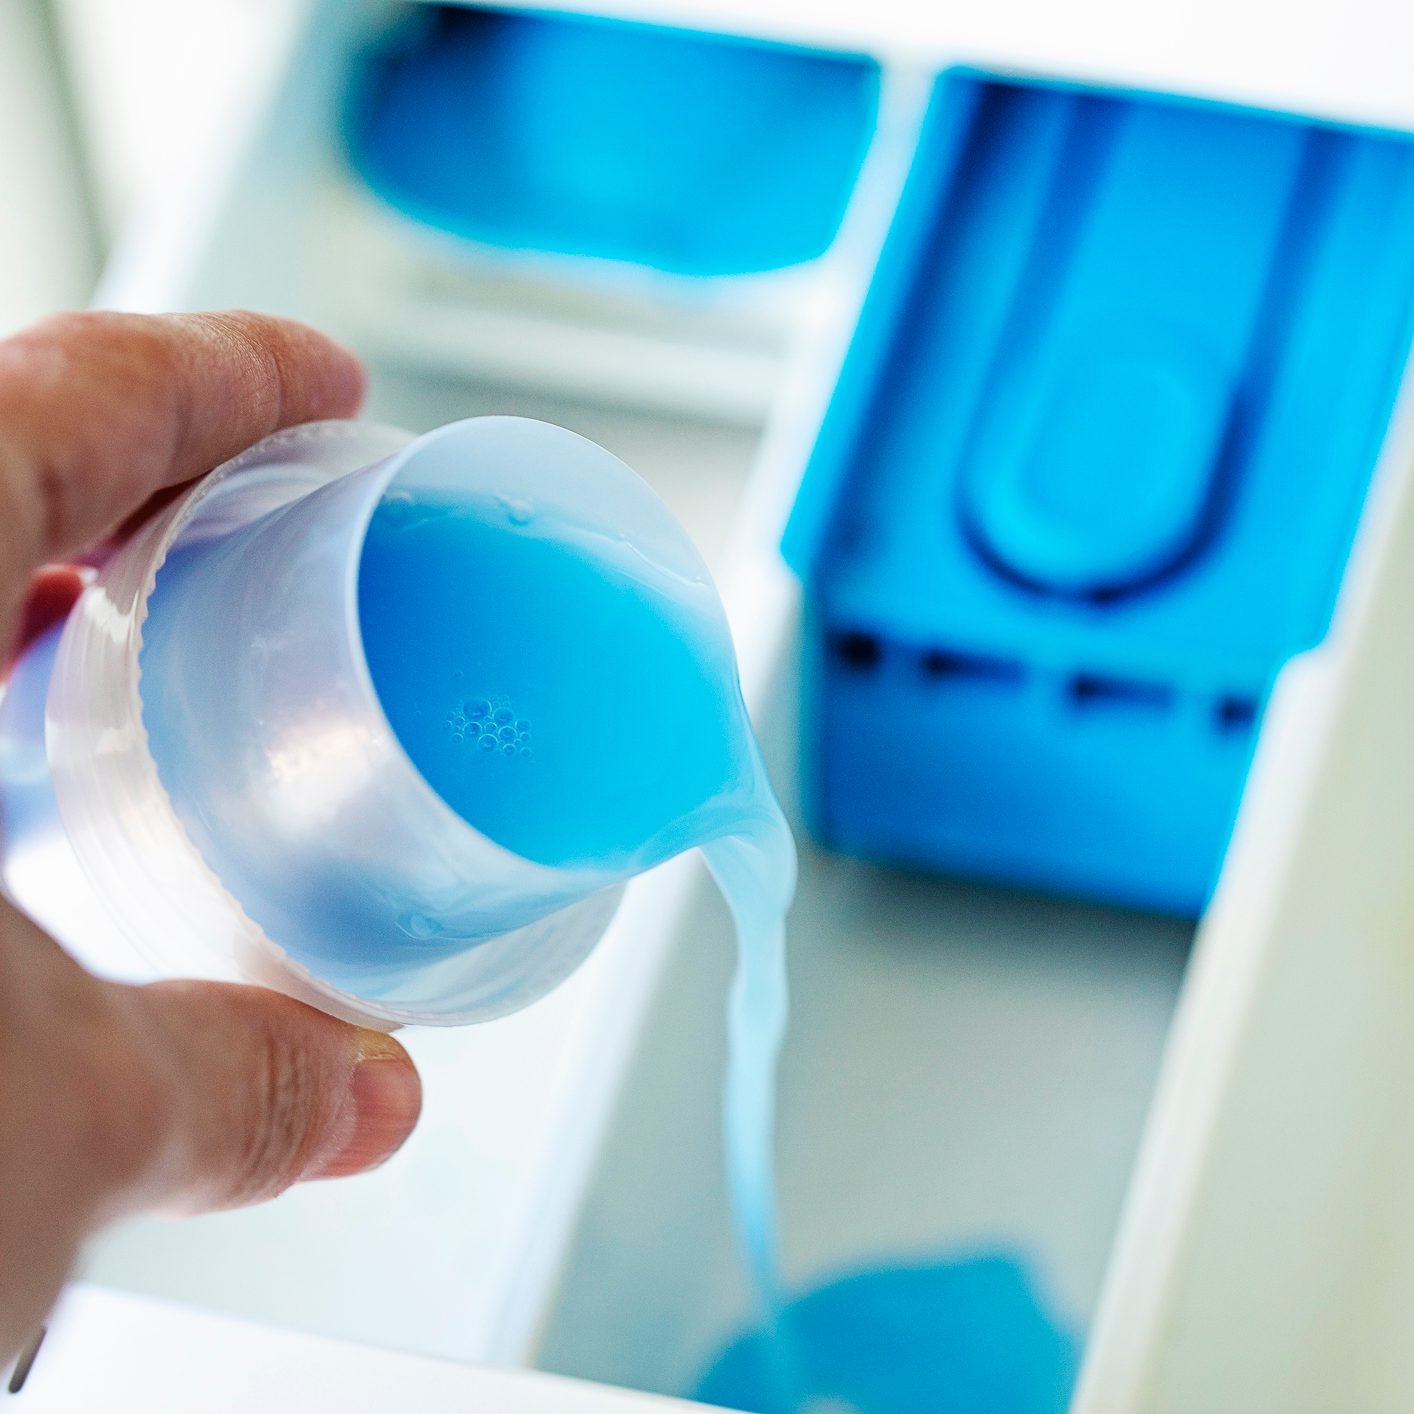 Laundry Detergent for sensitive skin